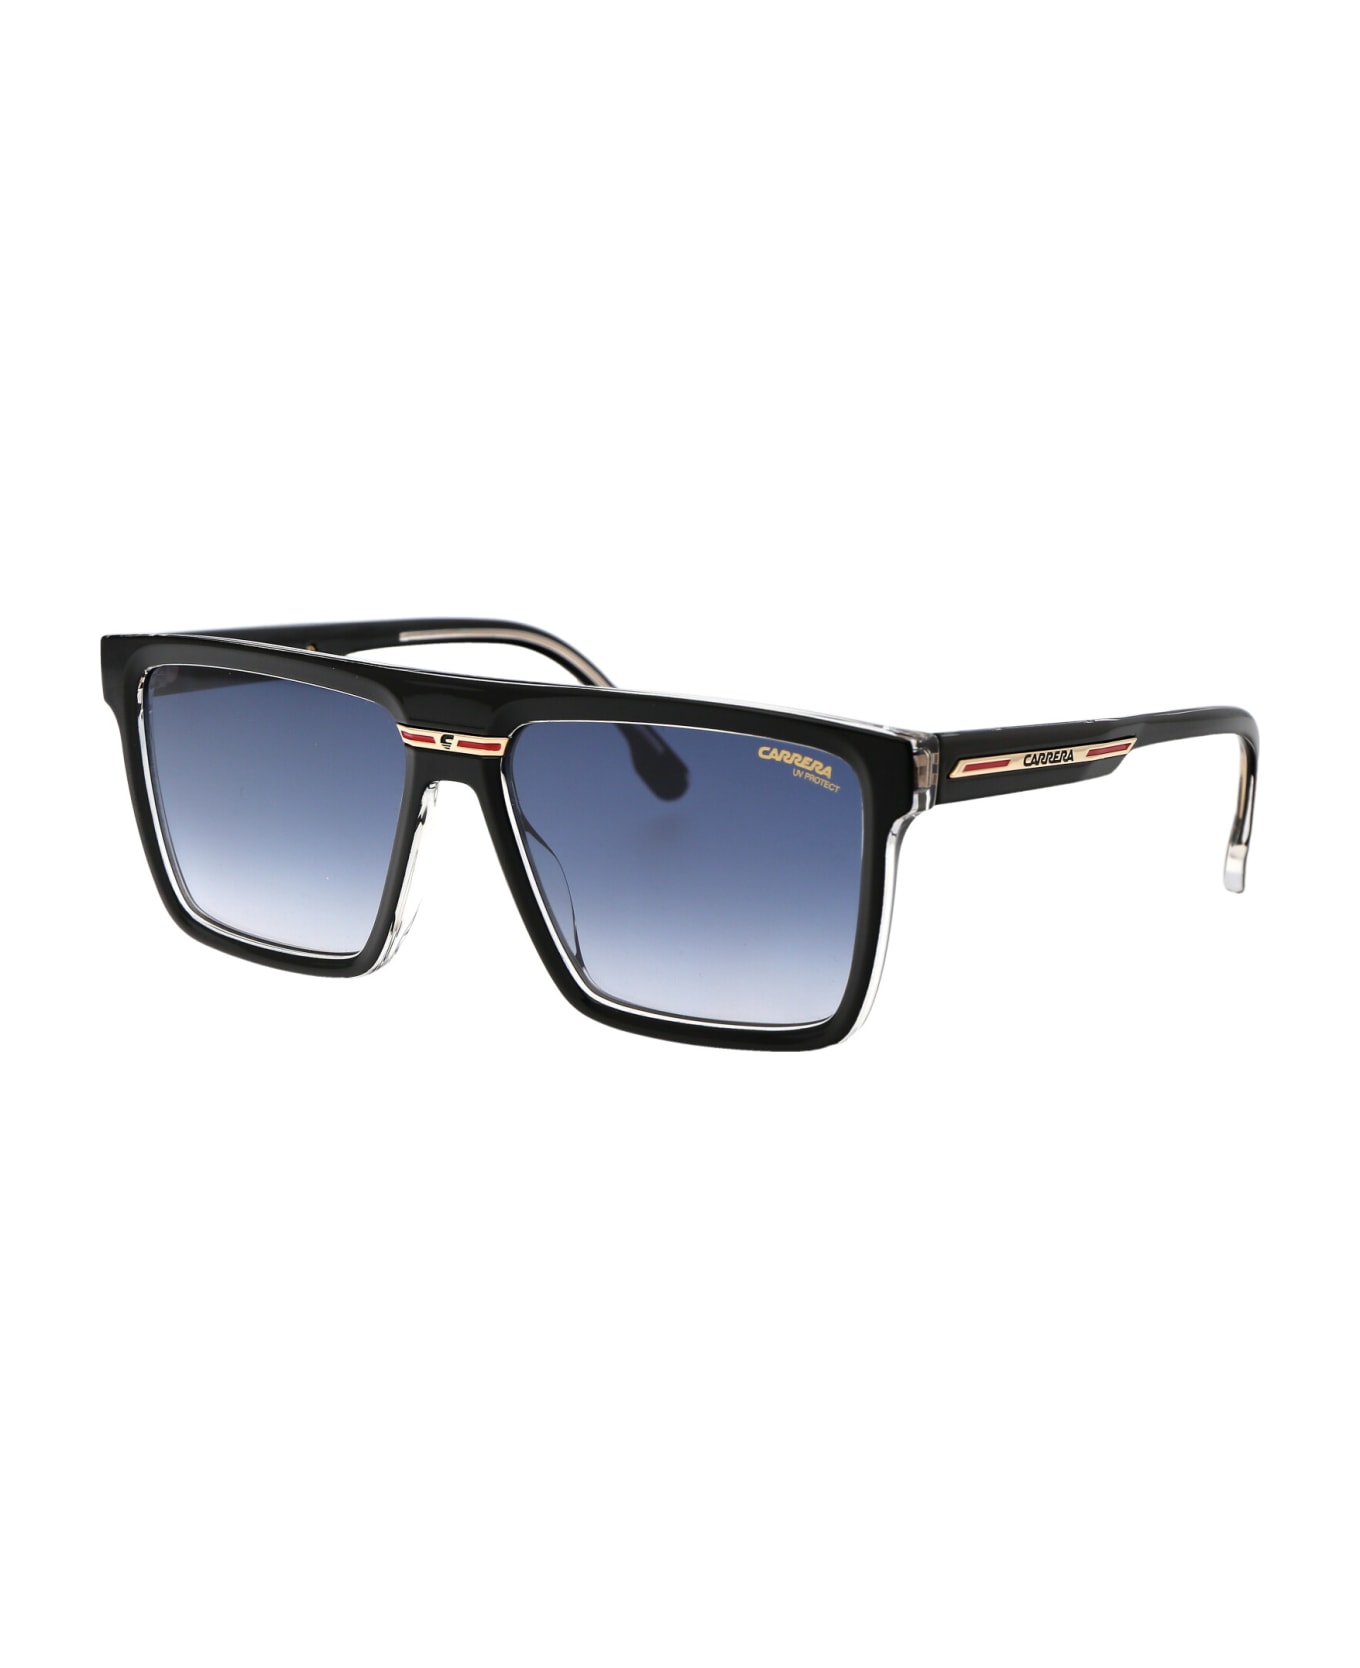 Carrera Victory C 03/s Sunglasses - 7C508 BLACK CRY